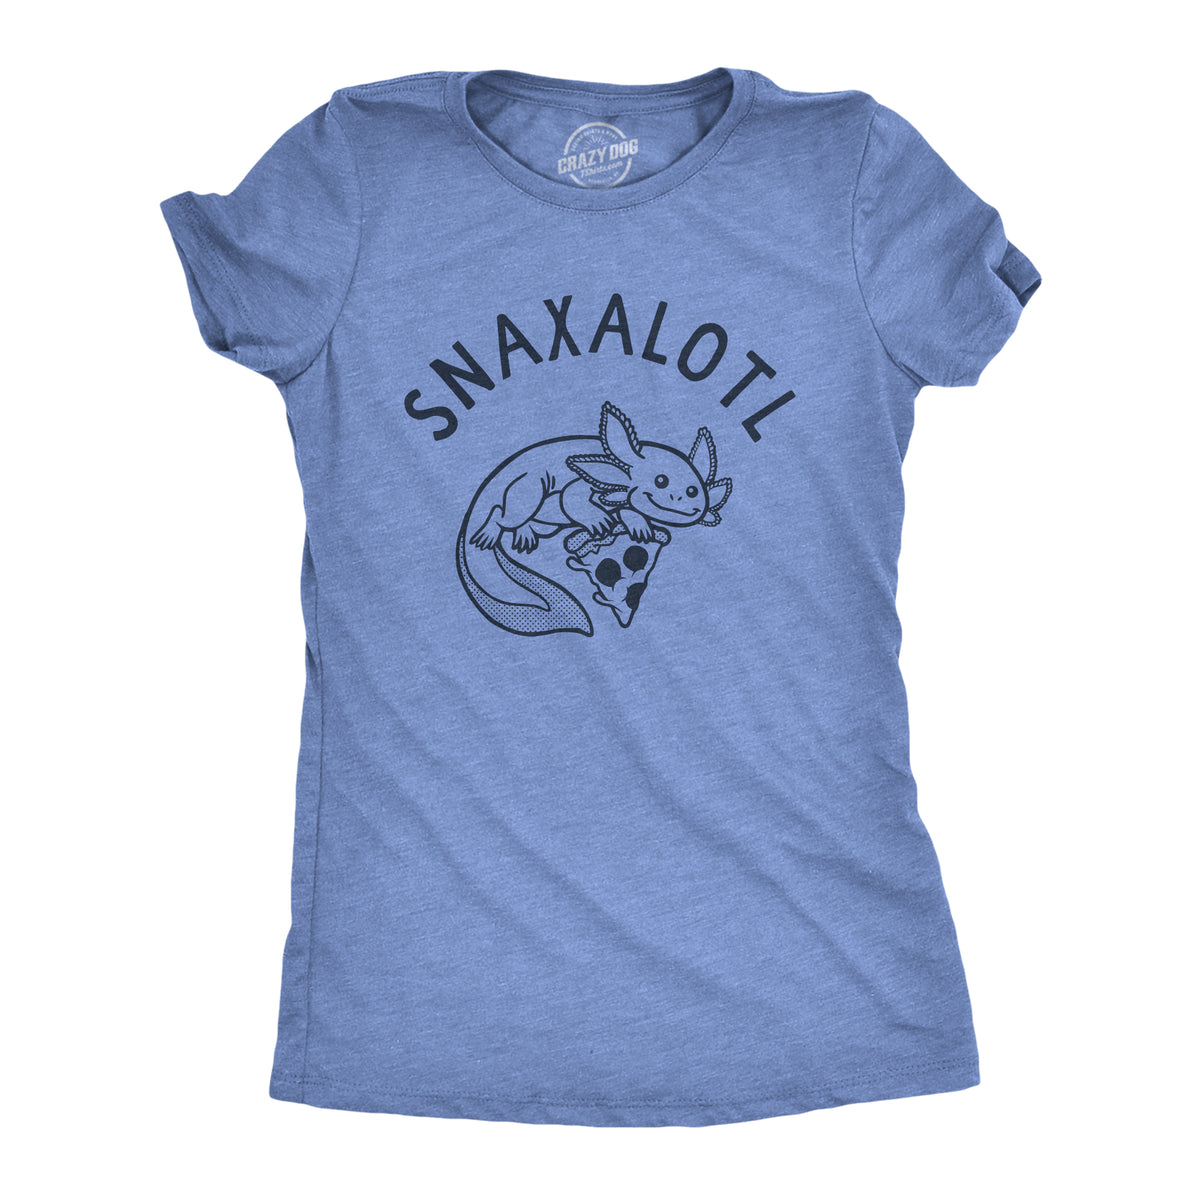 Funny Light Heather Blue Snaxalotl Womens T Shirt Nerdy animal food food Tee